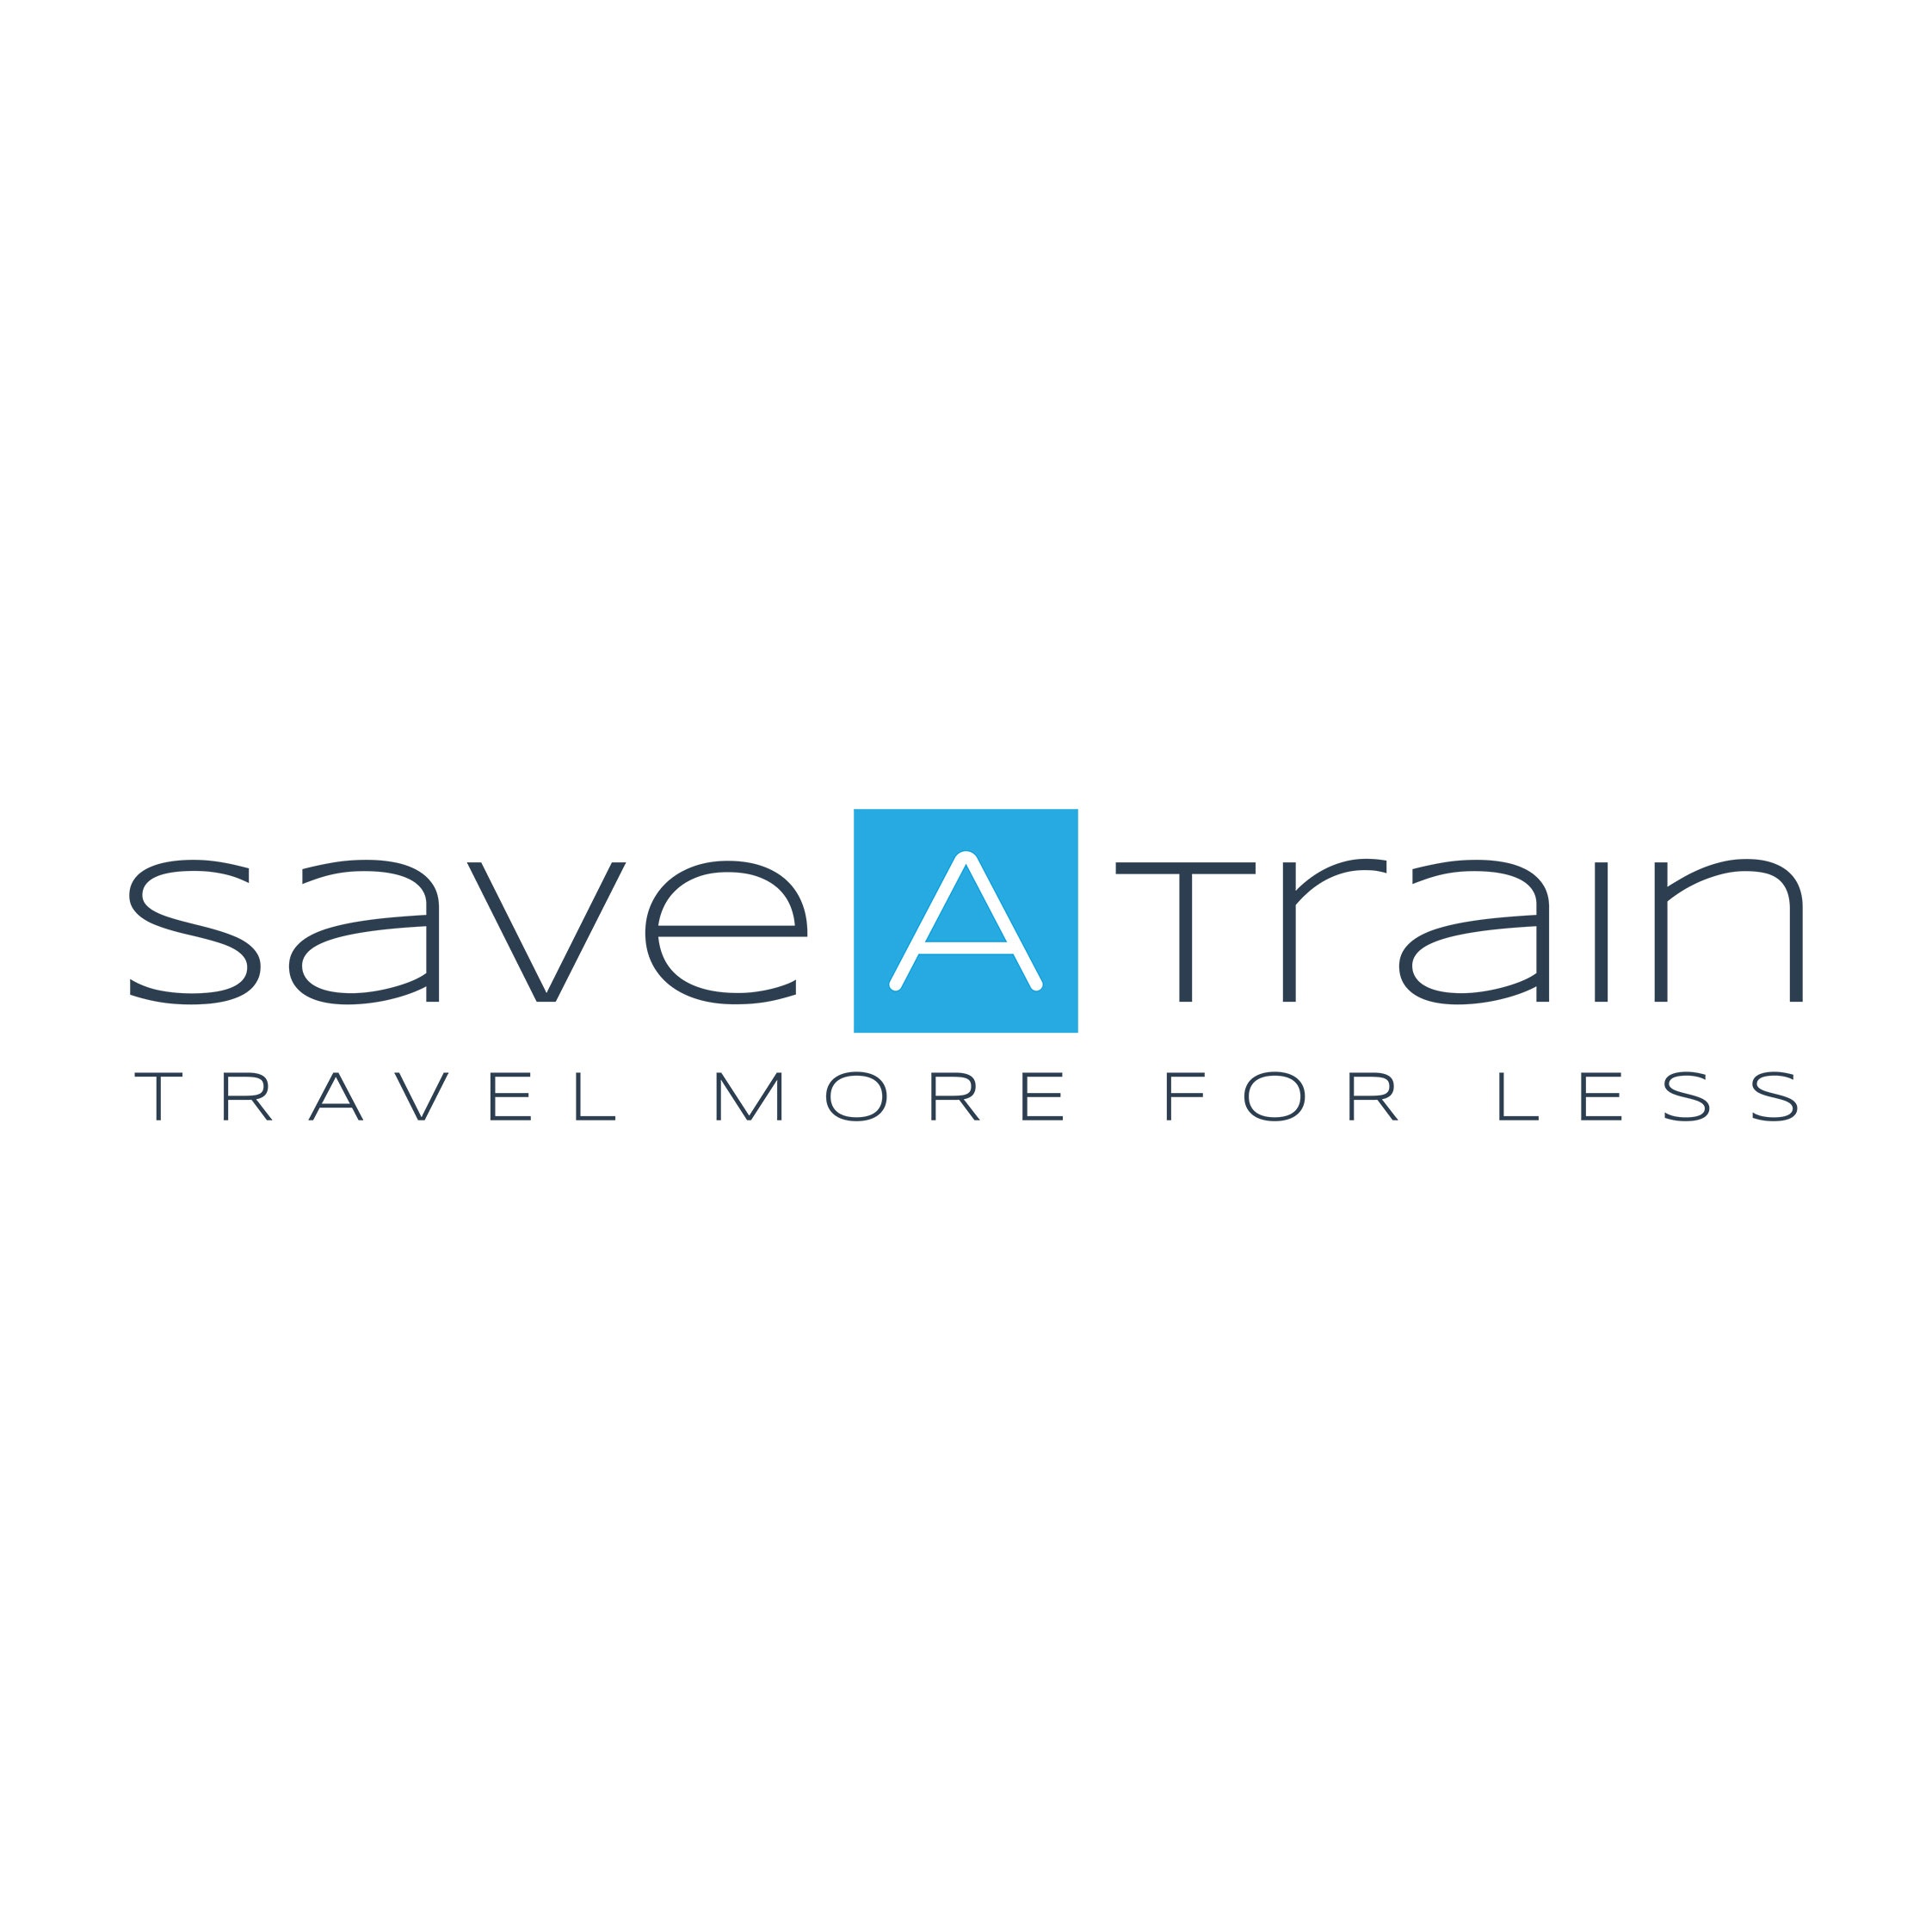 A propos de Save A Train